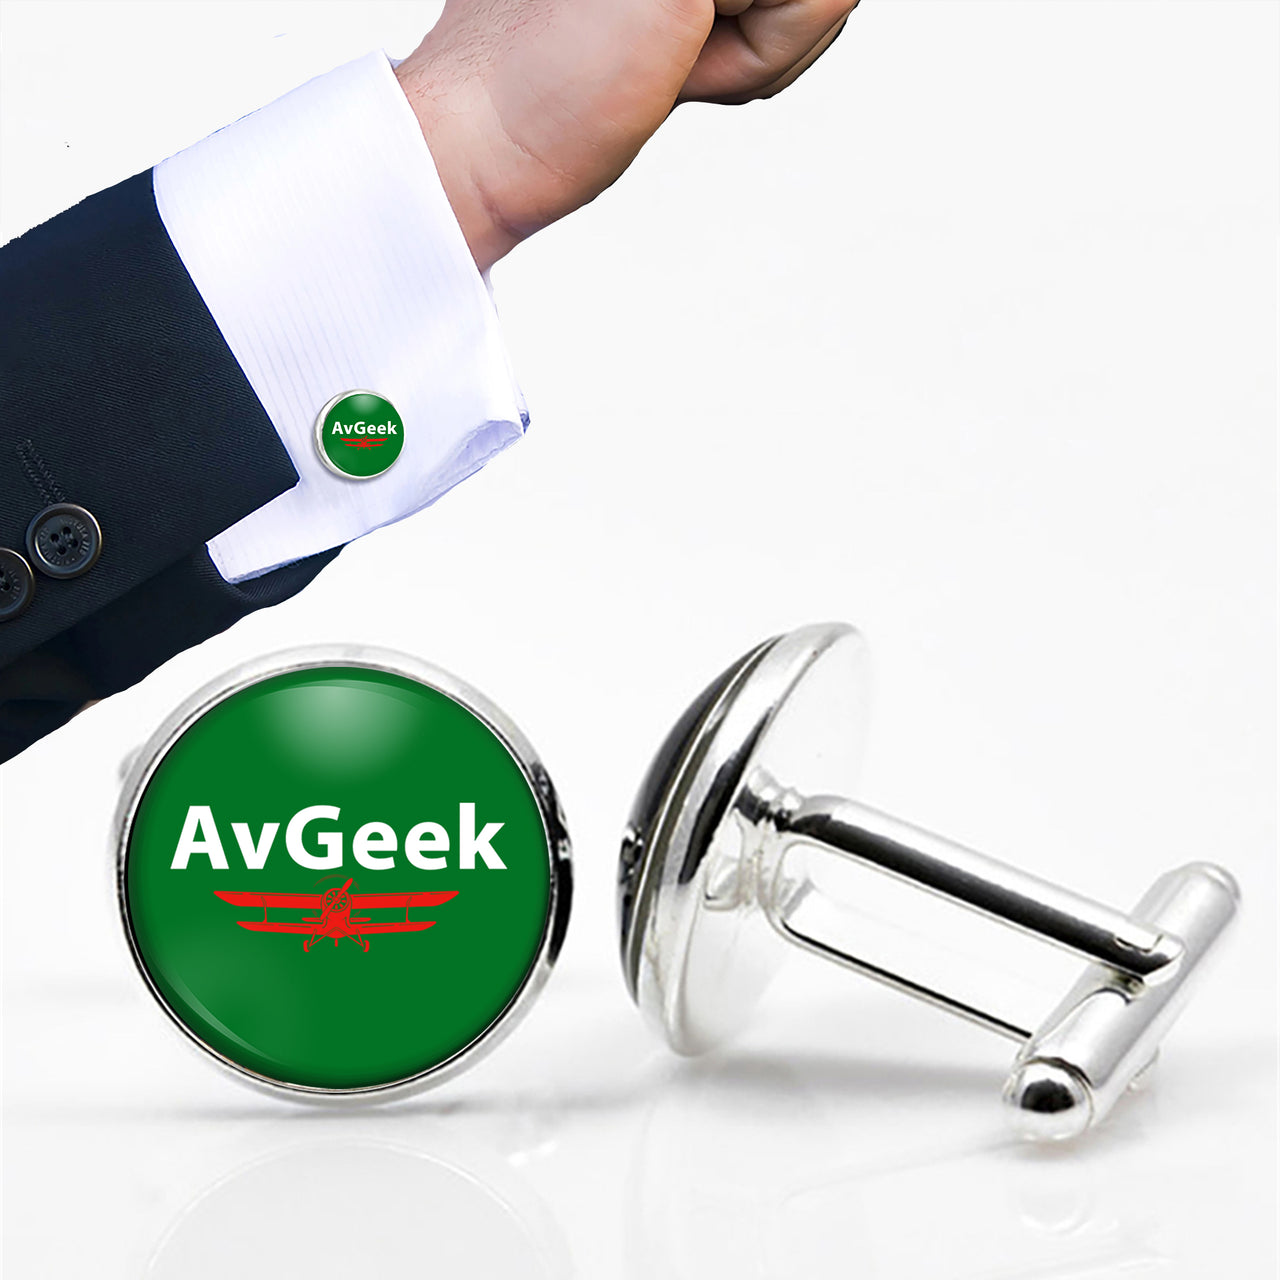 Avgeek Designed Cuff Links